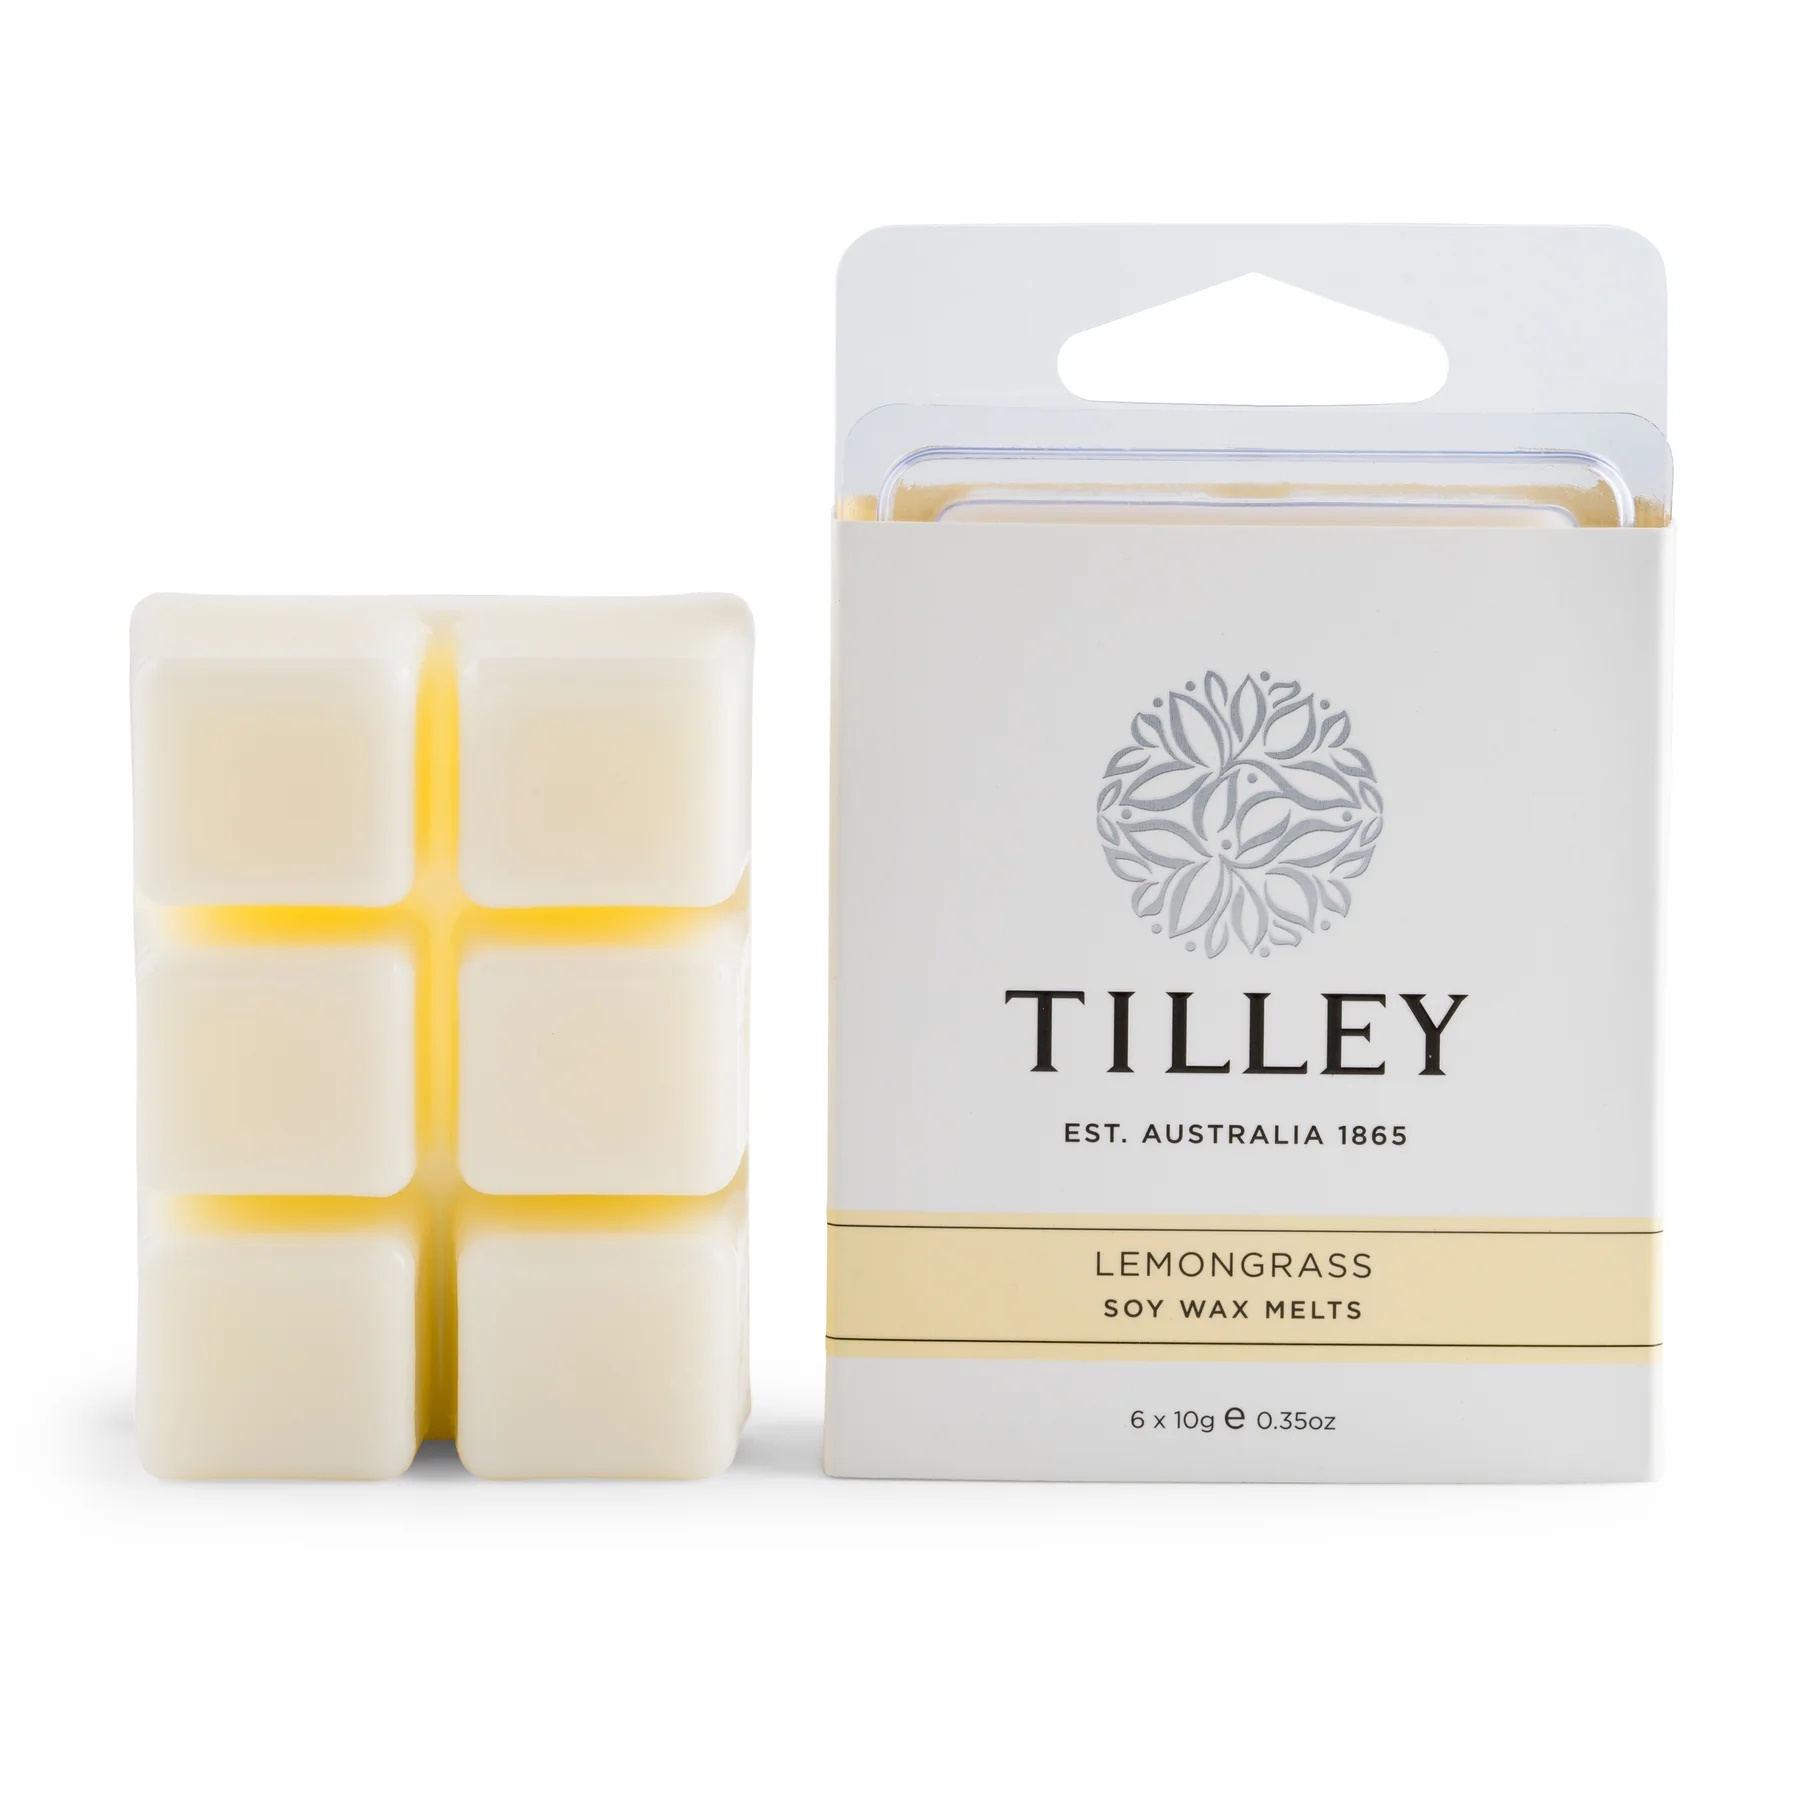 Tilley Lemongrass Square Soy Wax Melts 60g